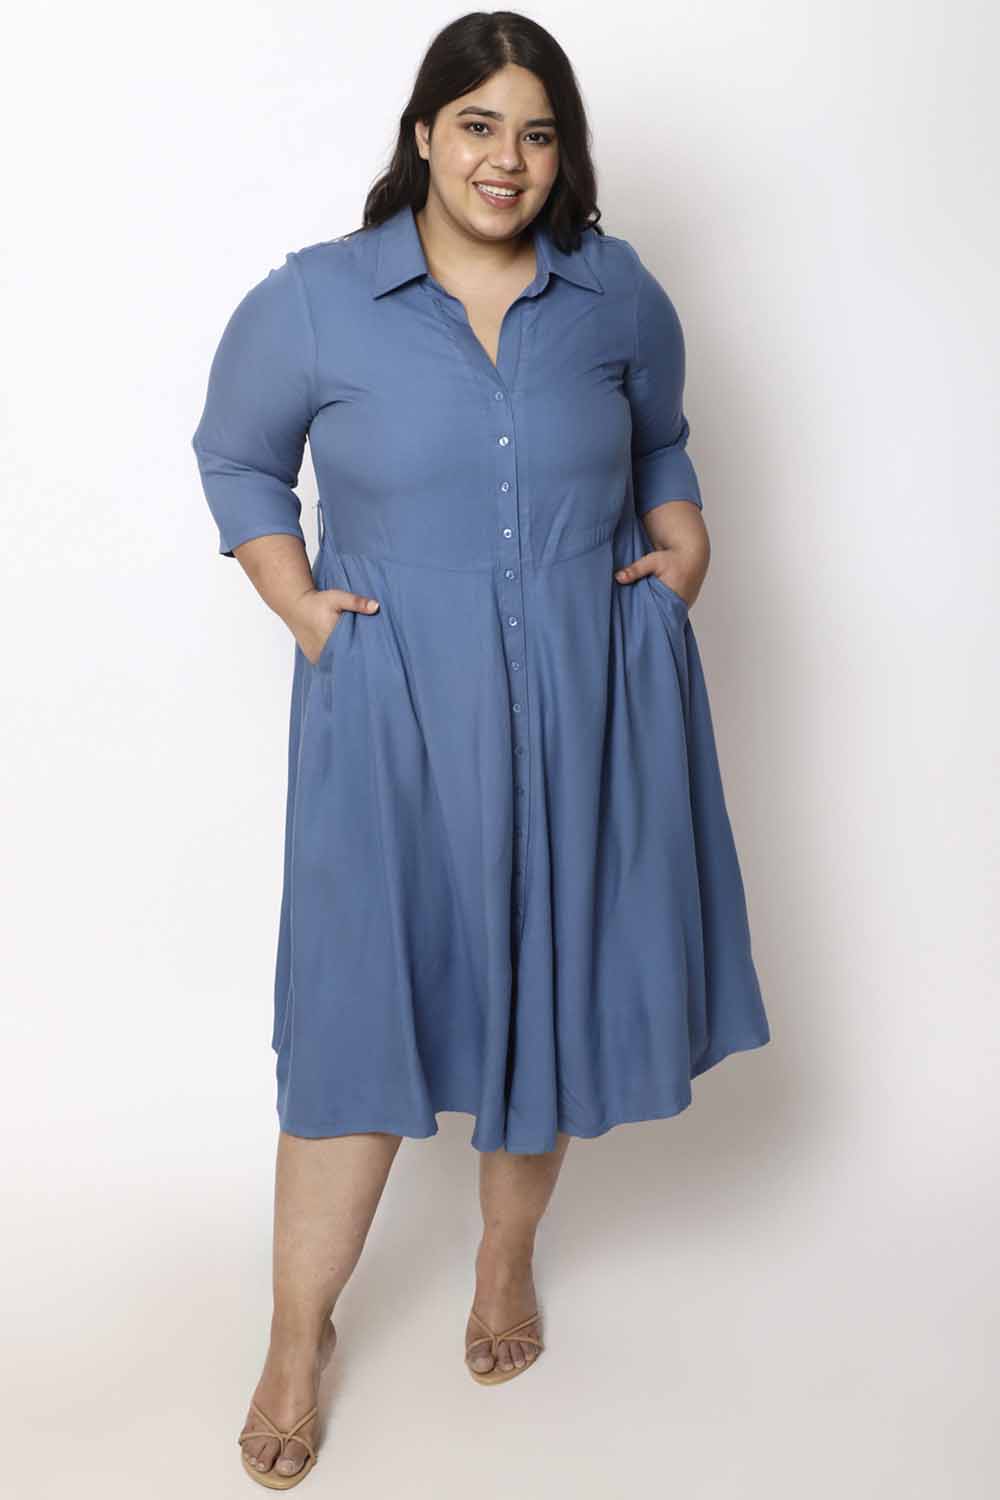 Plus Size Blue Shirt Dress for Women